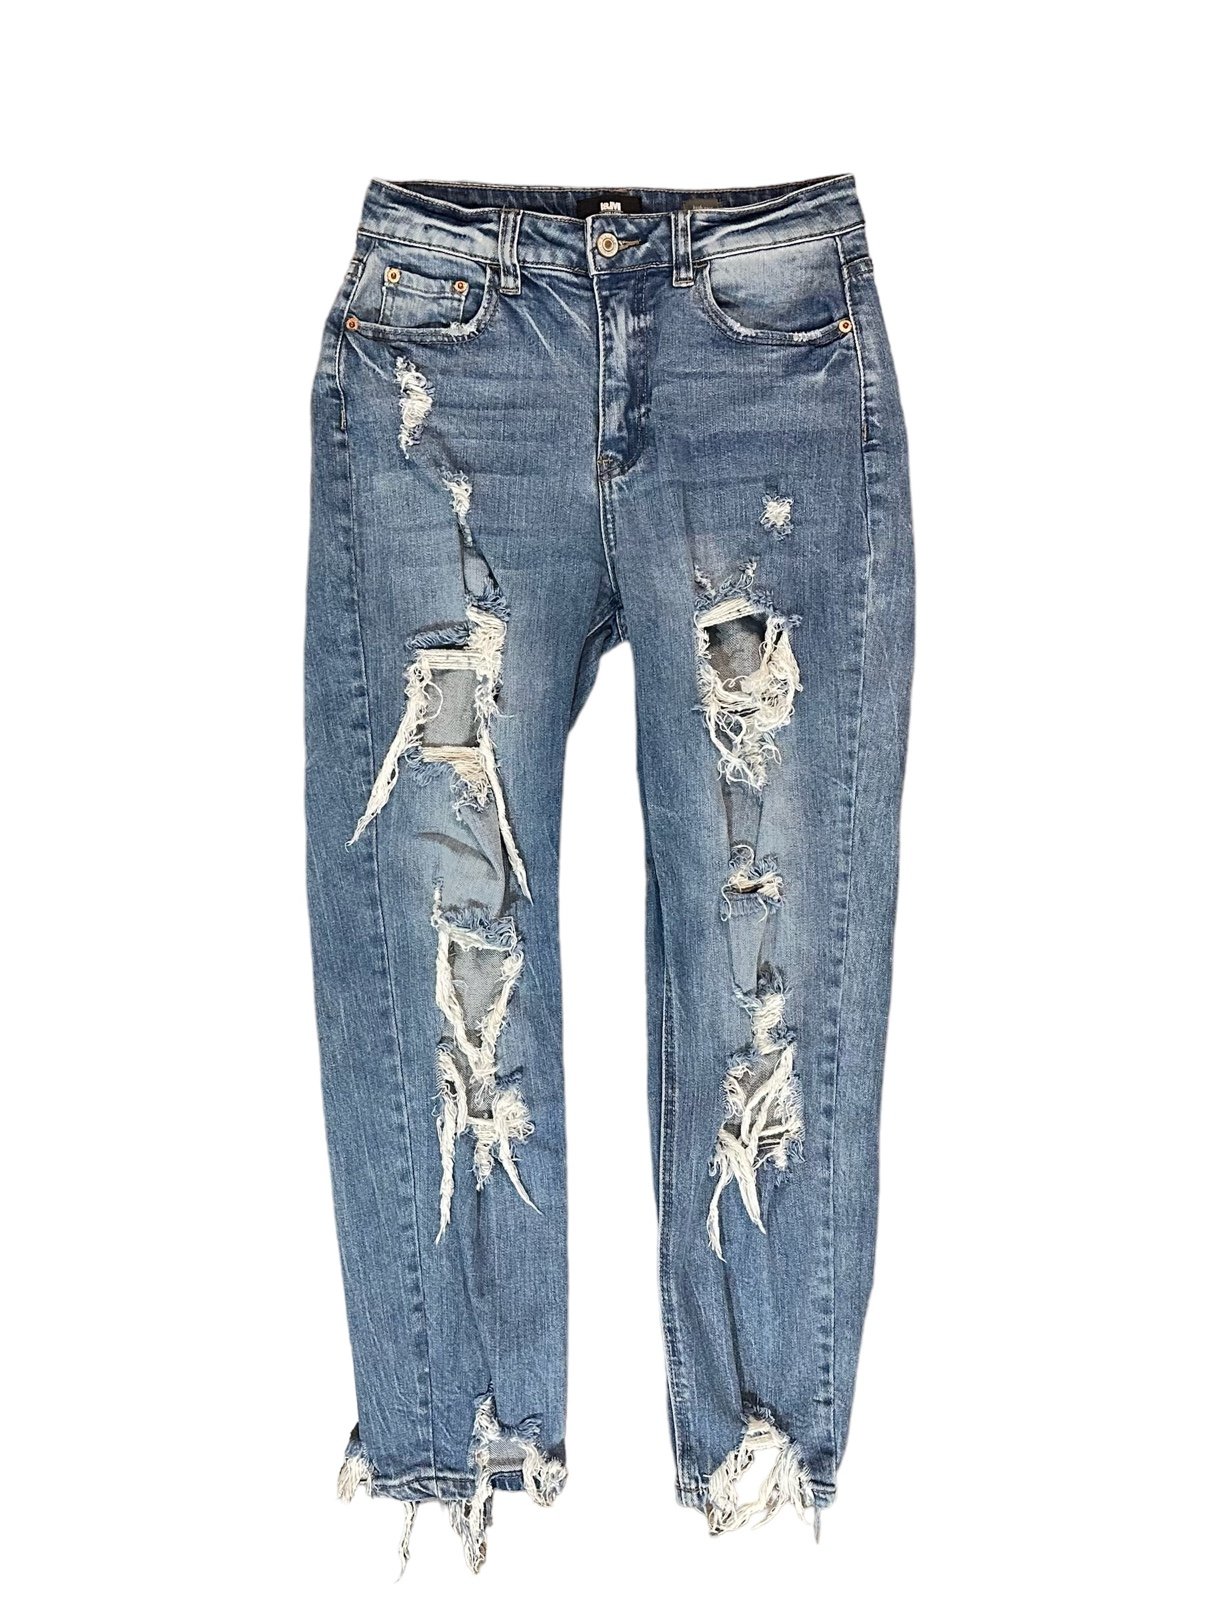 Comfortable I&M Black Label Premium Denim High Rise Mom Jeans Distressed Medium Wash Size 3 LbtnPmR58 Hot Sale